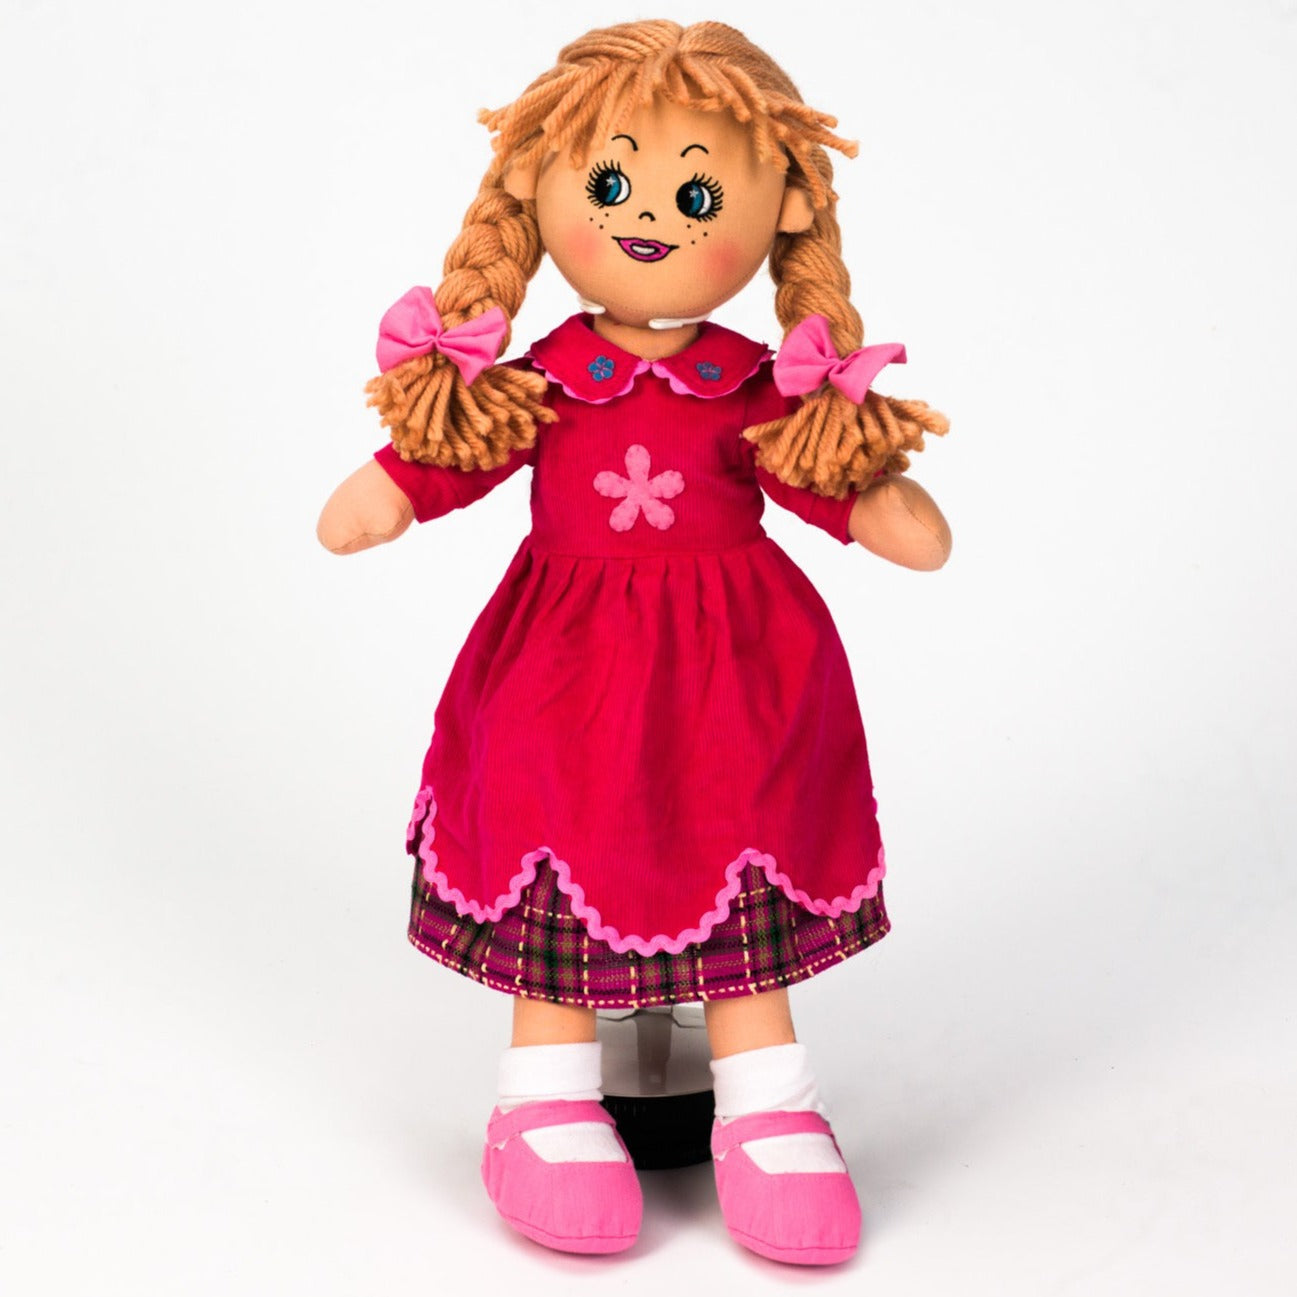 Personalised Rag Doll - Pretty Poppy